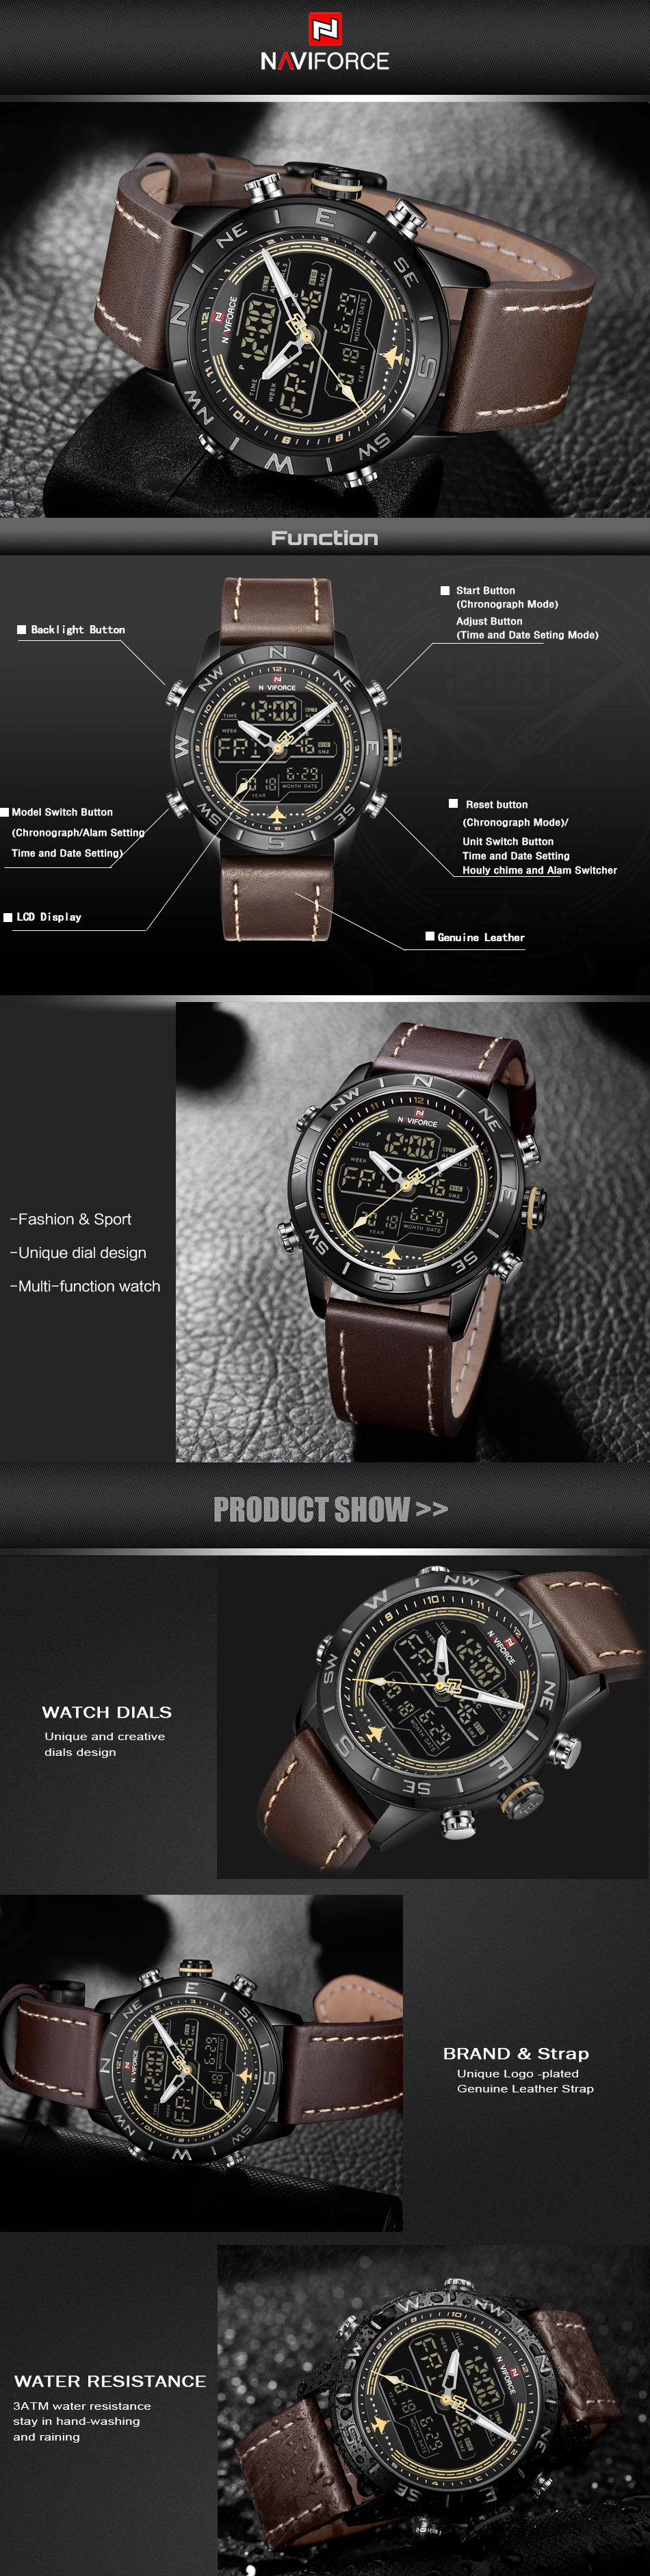 NAVIFORCE-NF9144-Water-Resistant-LED-Dual-Display-Watch-Chronograph-Digital-Watch-1389195